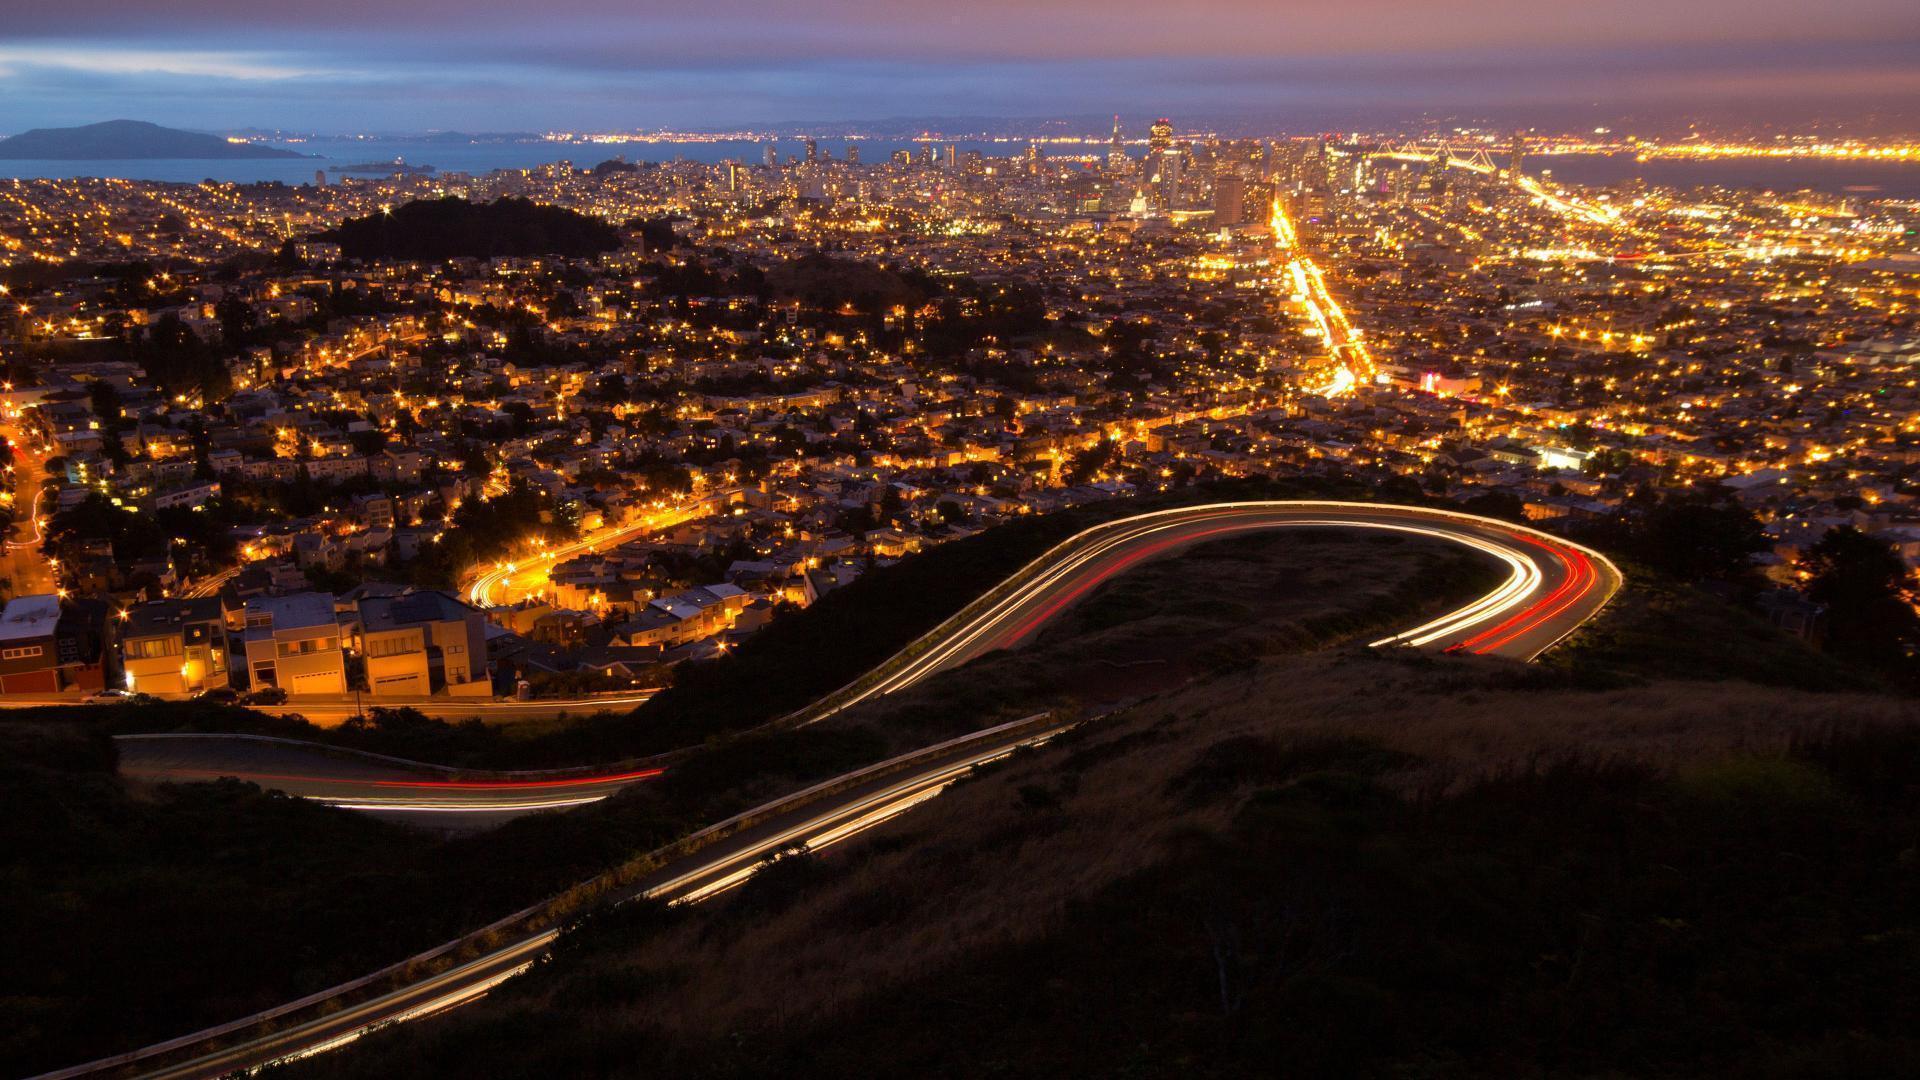 San Francisco Skyline At Night Desktop Wallpaper And Background